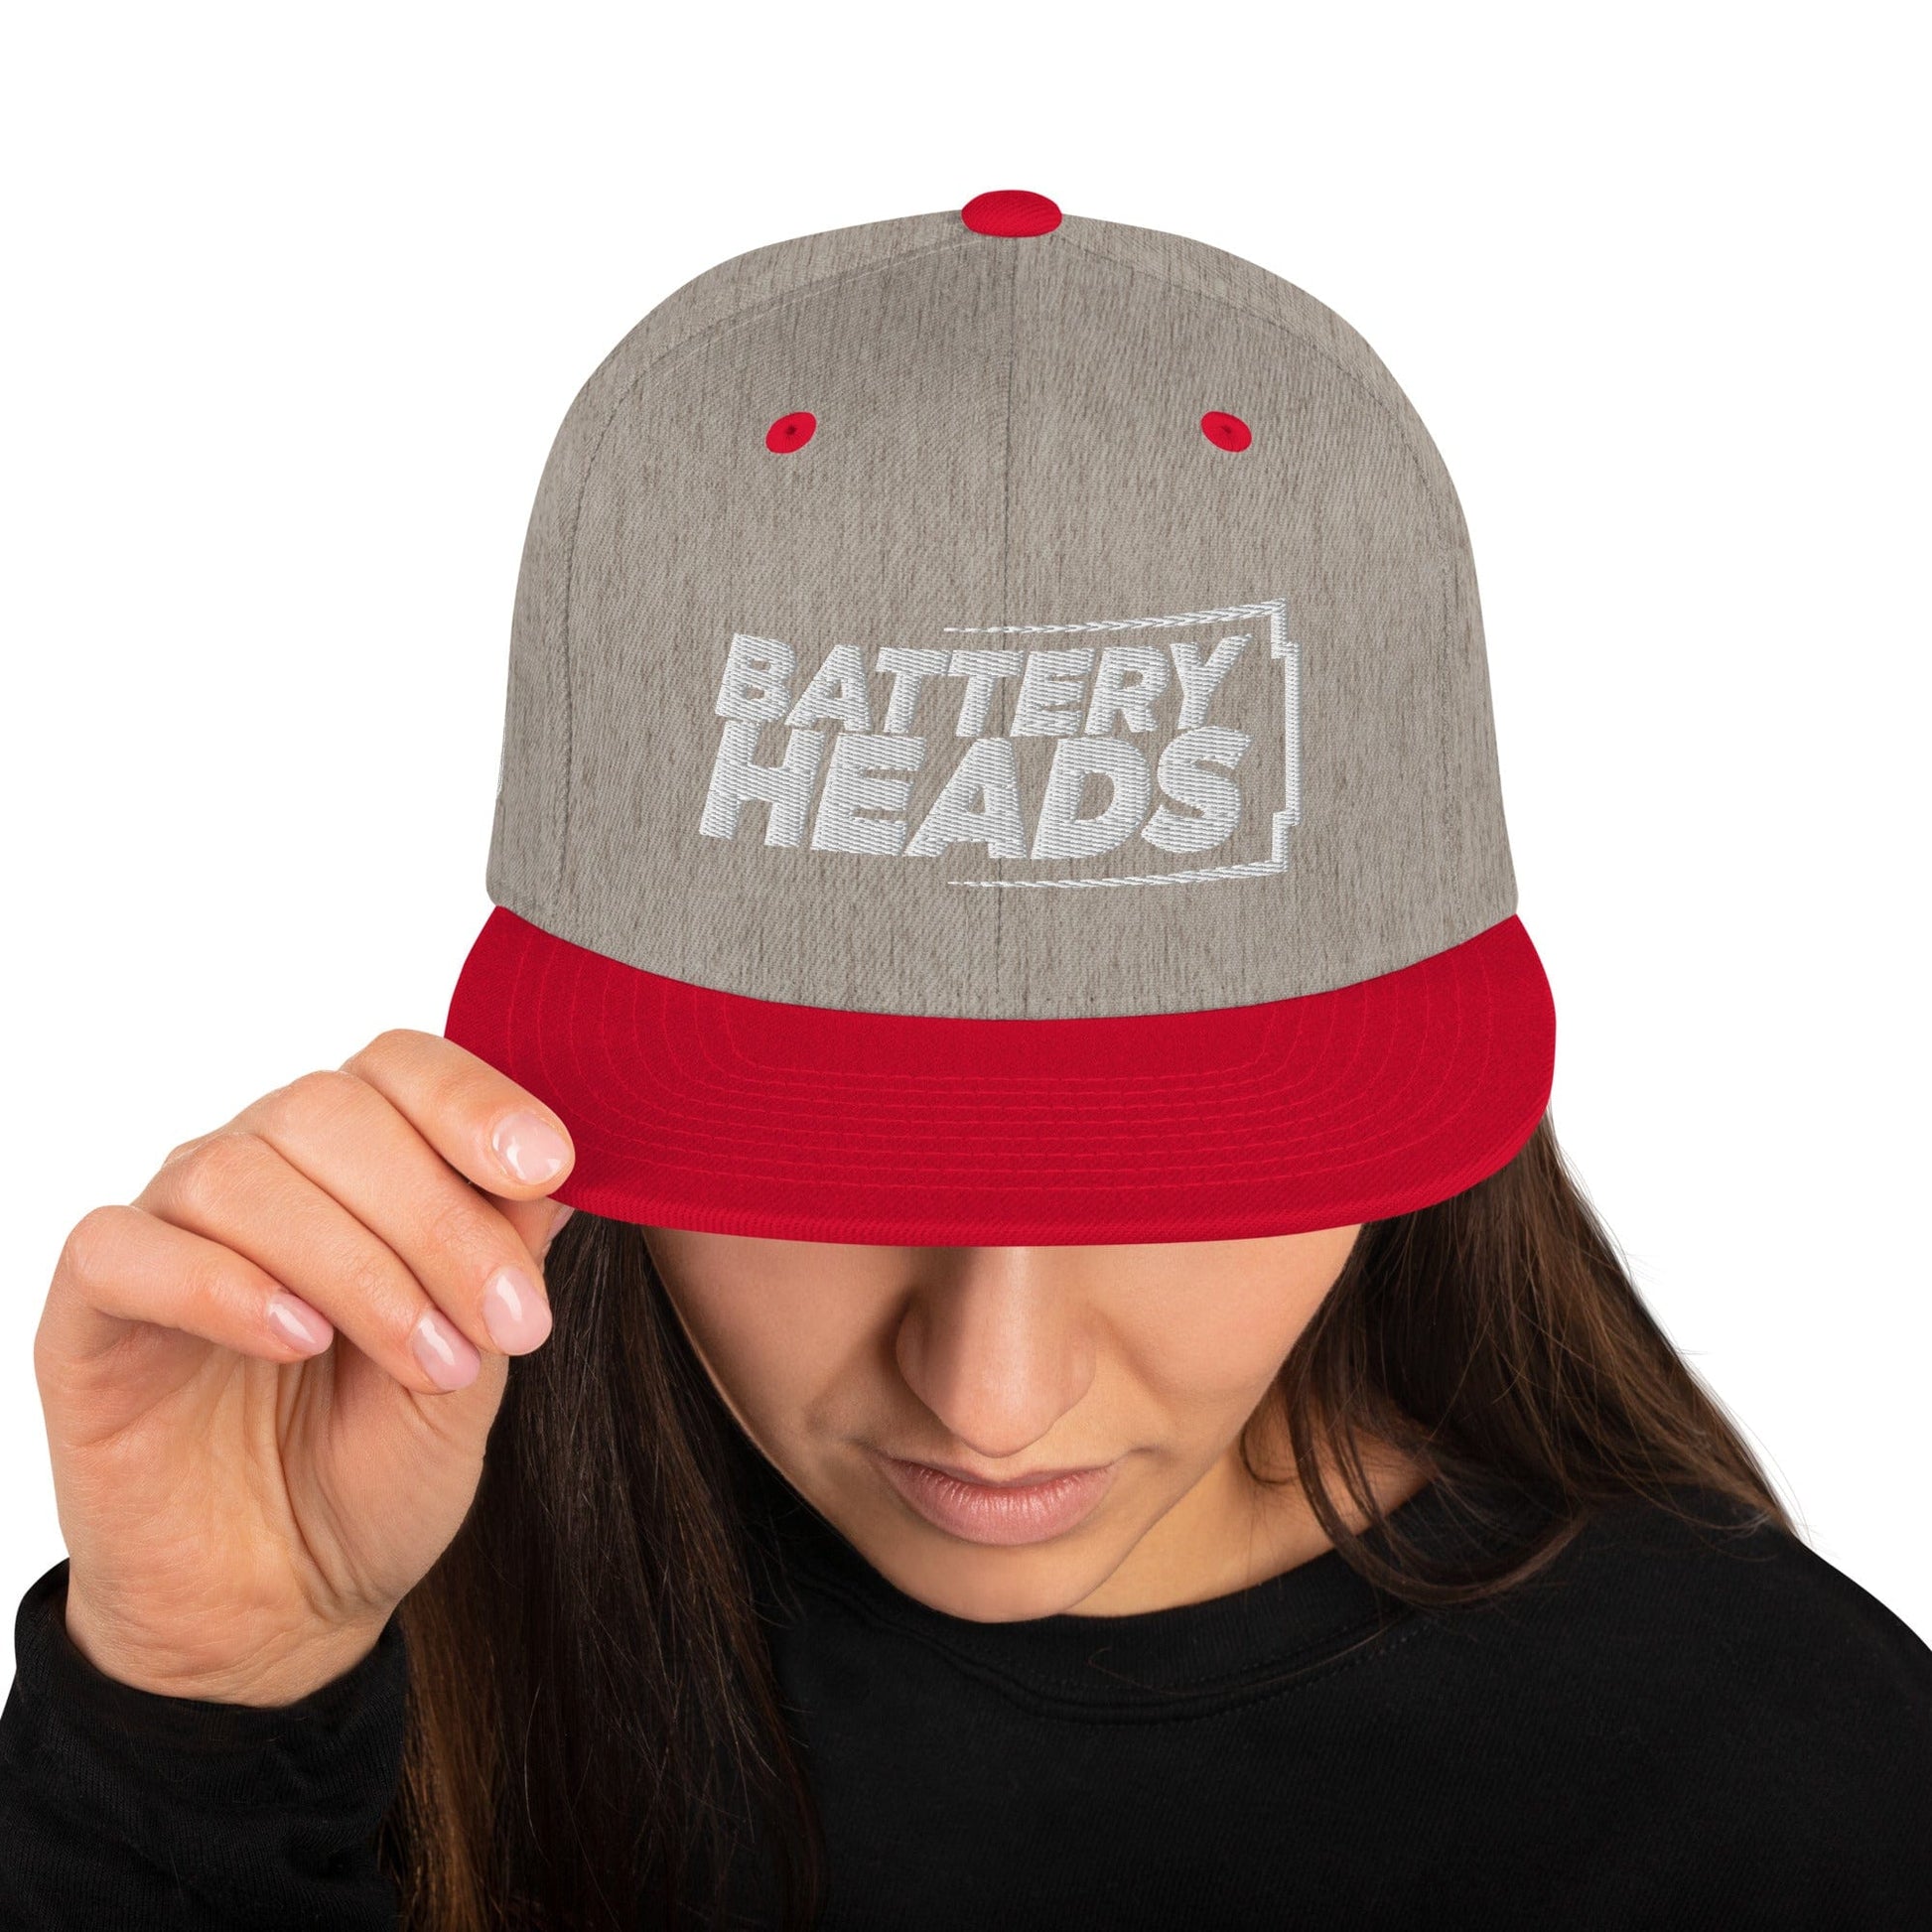 Sons of Battery® - E-MTB Brand & Community Heather Grau/ Rot Battery Heads - Snapback-Cap E-Bike-Community